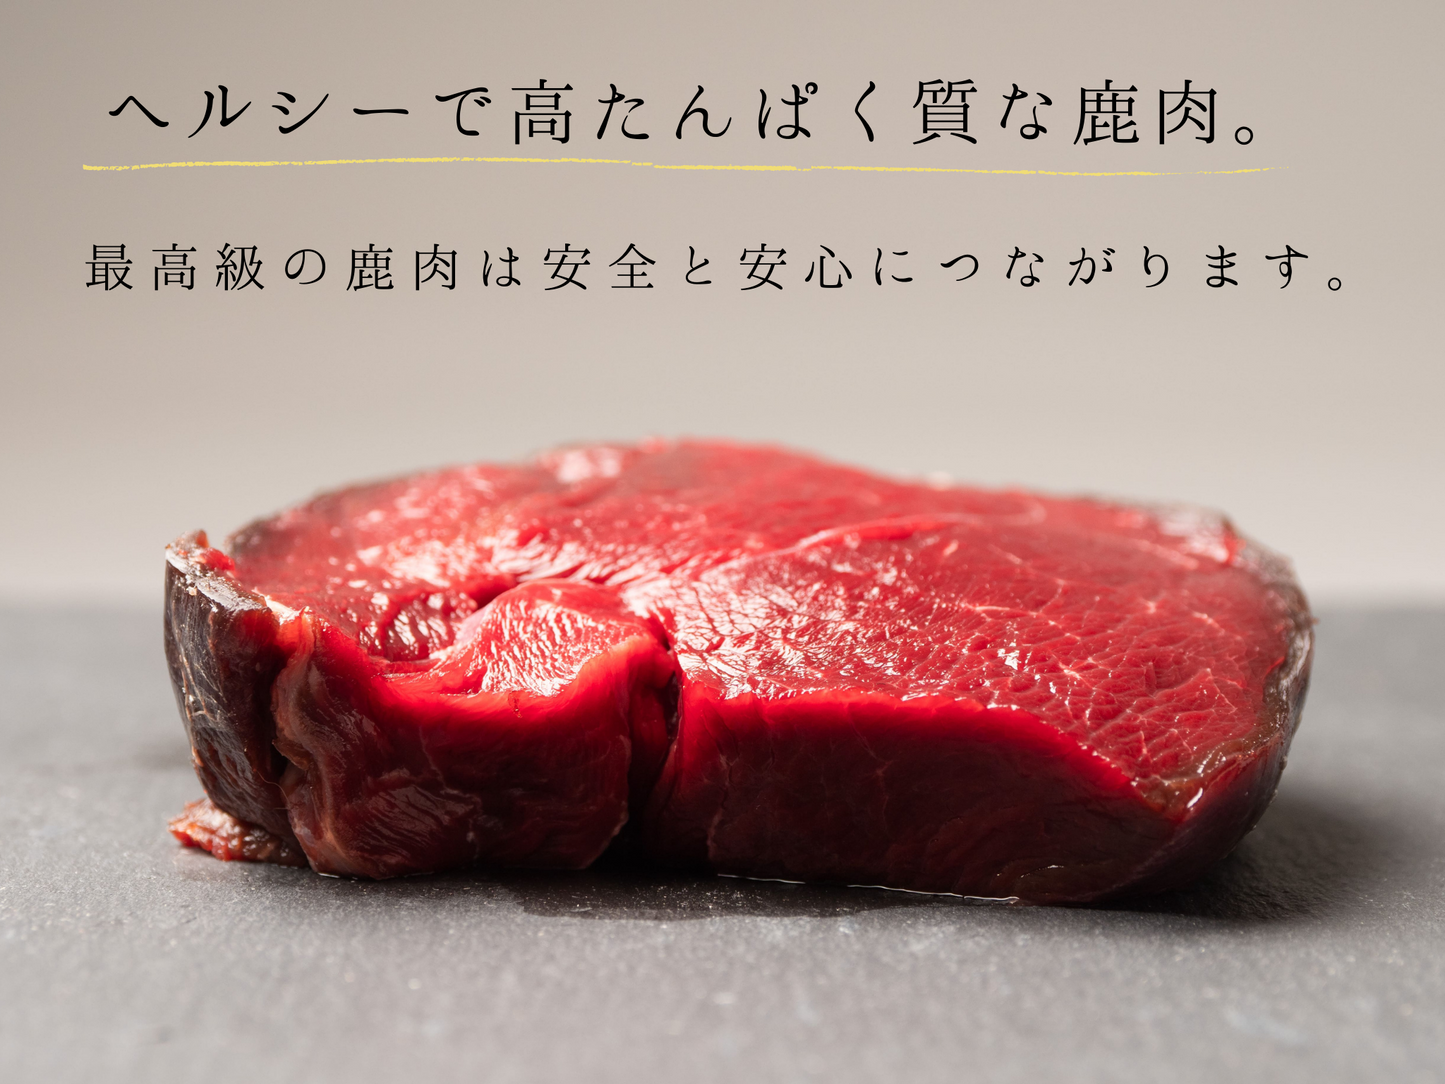 Zasshu® [Premium Mix Tray] Venison Ezo Deer Meat Ezo Venison Ezo Shika Meat [Hokkaido Highest Quality] Dog Cat Pet Food